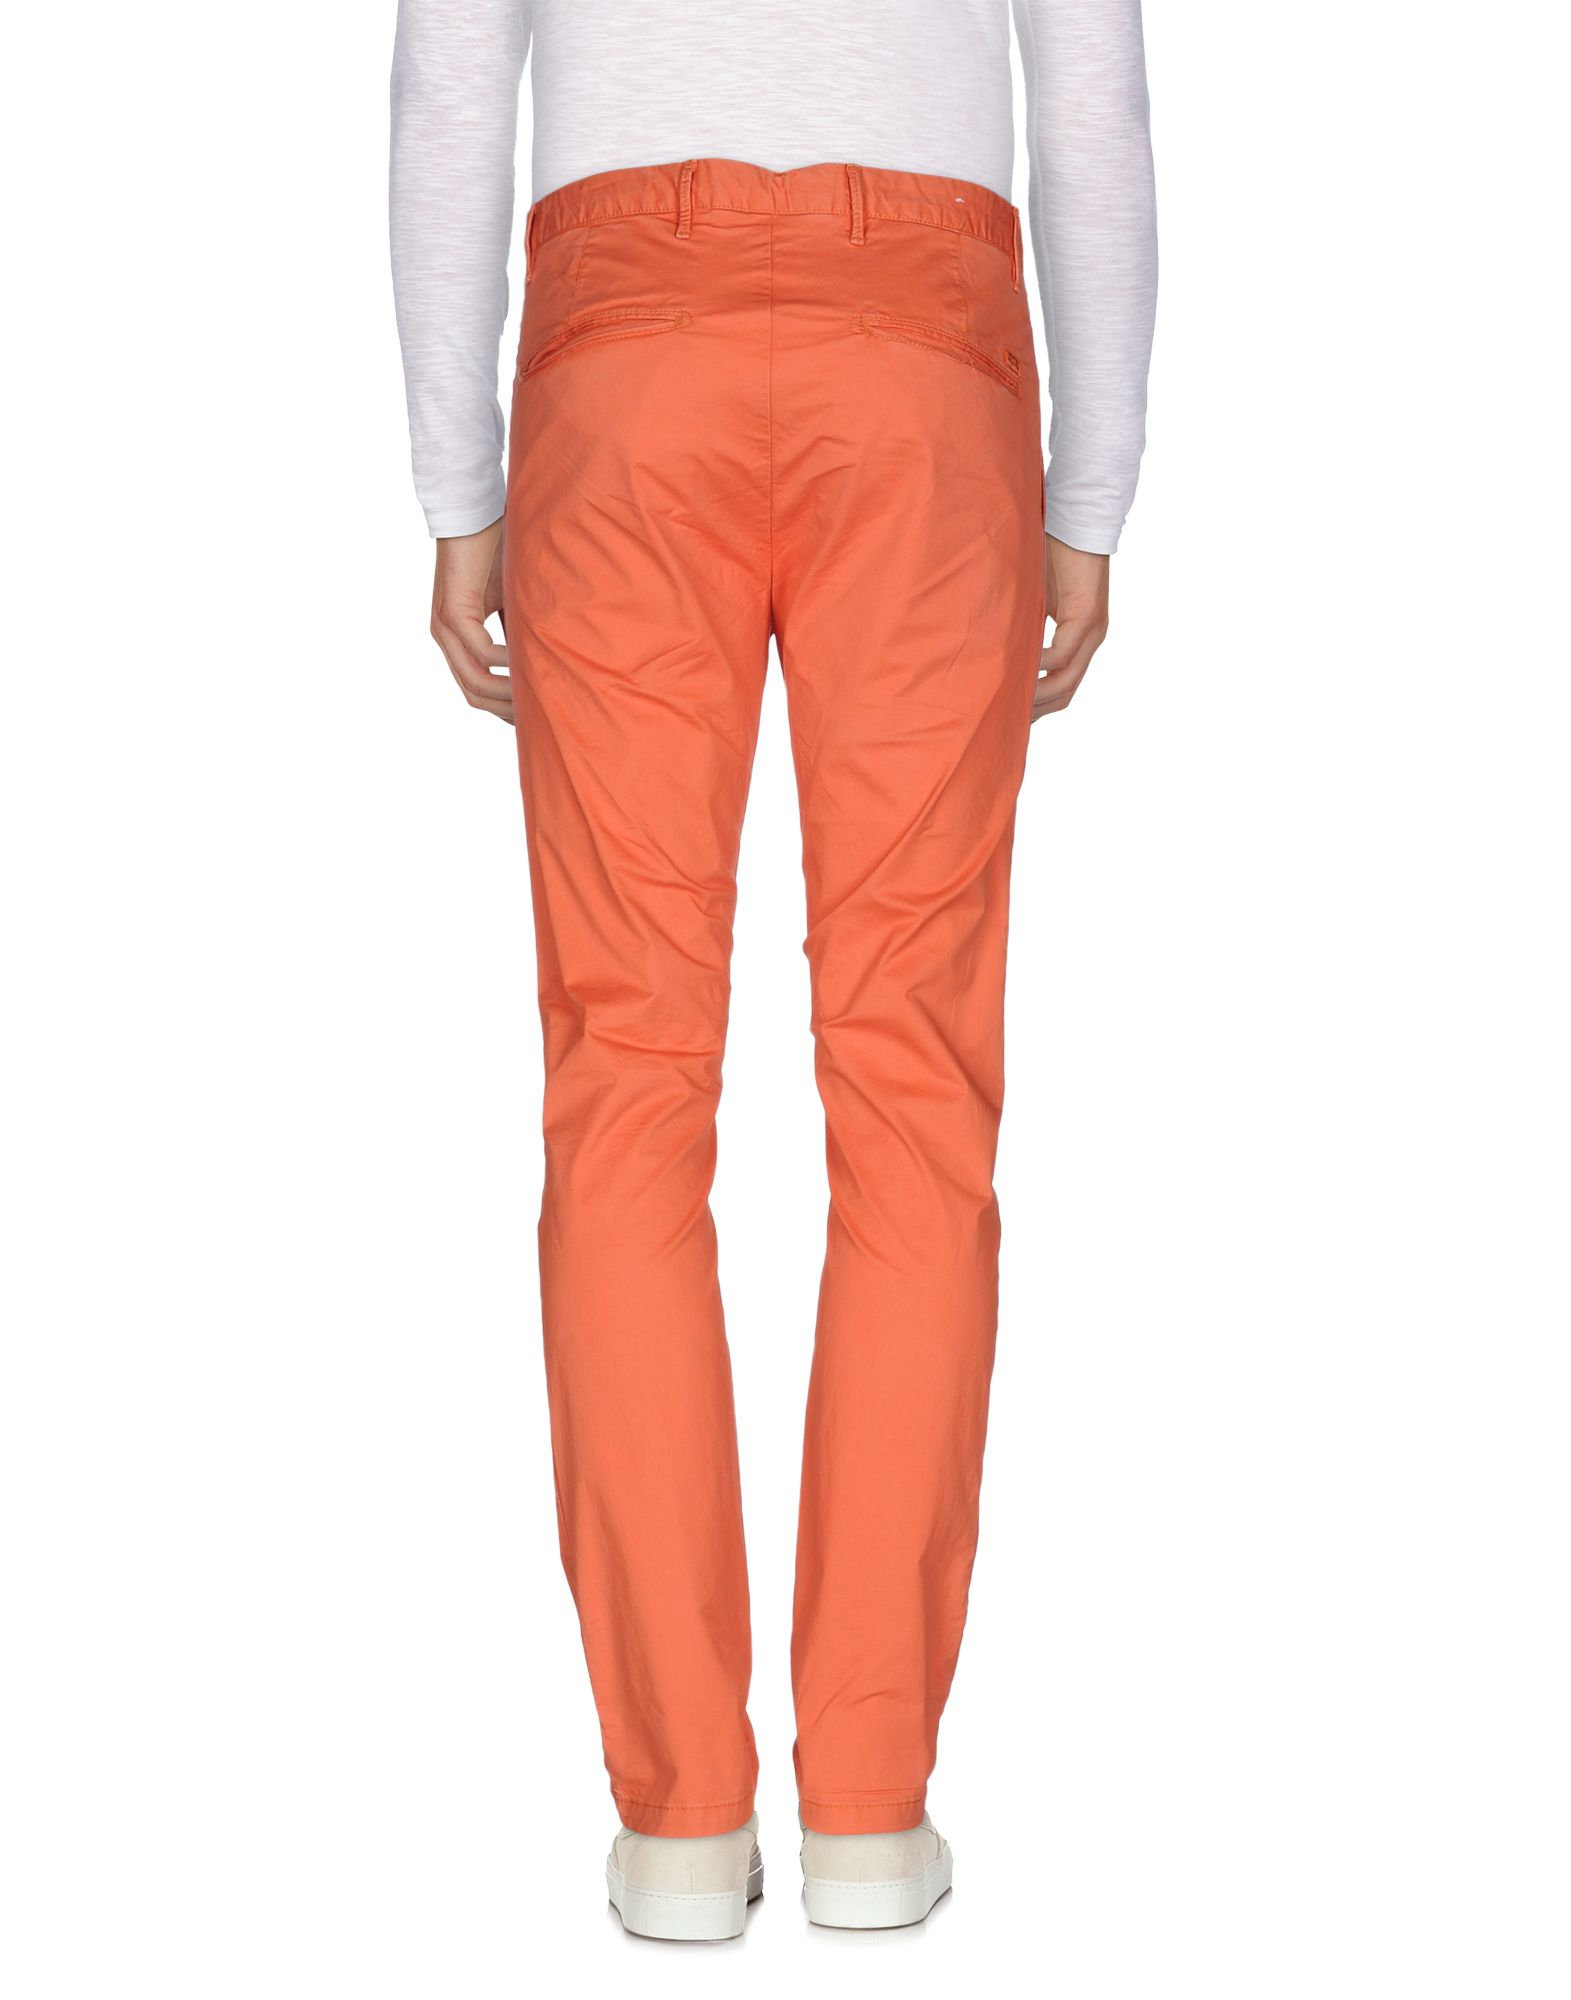 Scotch & Soda Casual Trouser in Orange for Men - Lyst